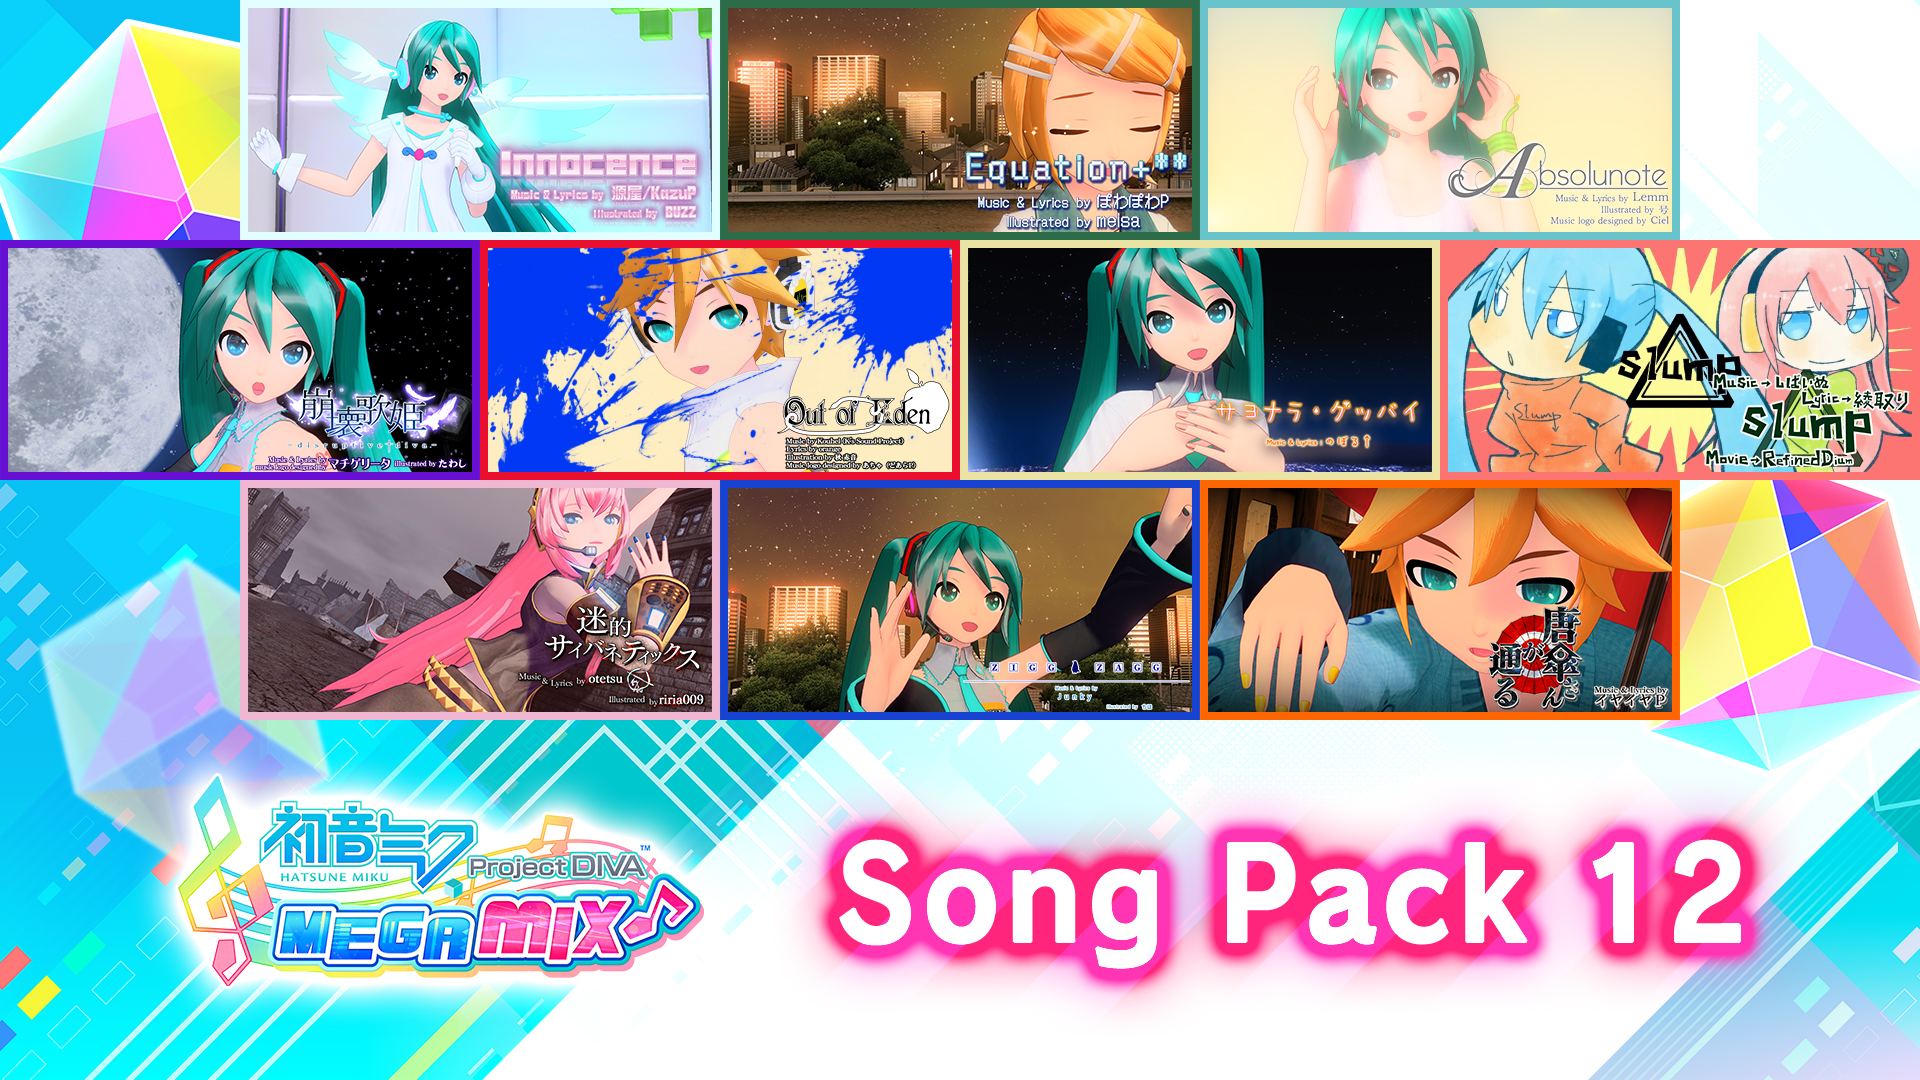 Hatsune Miku: Project DIVA Mega Mix Song Pack 12